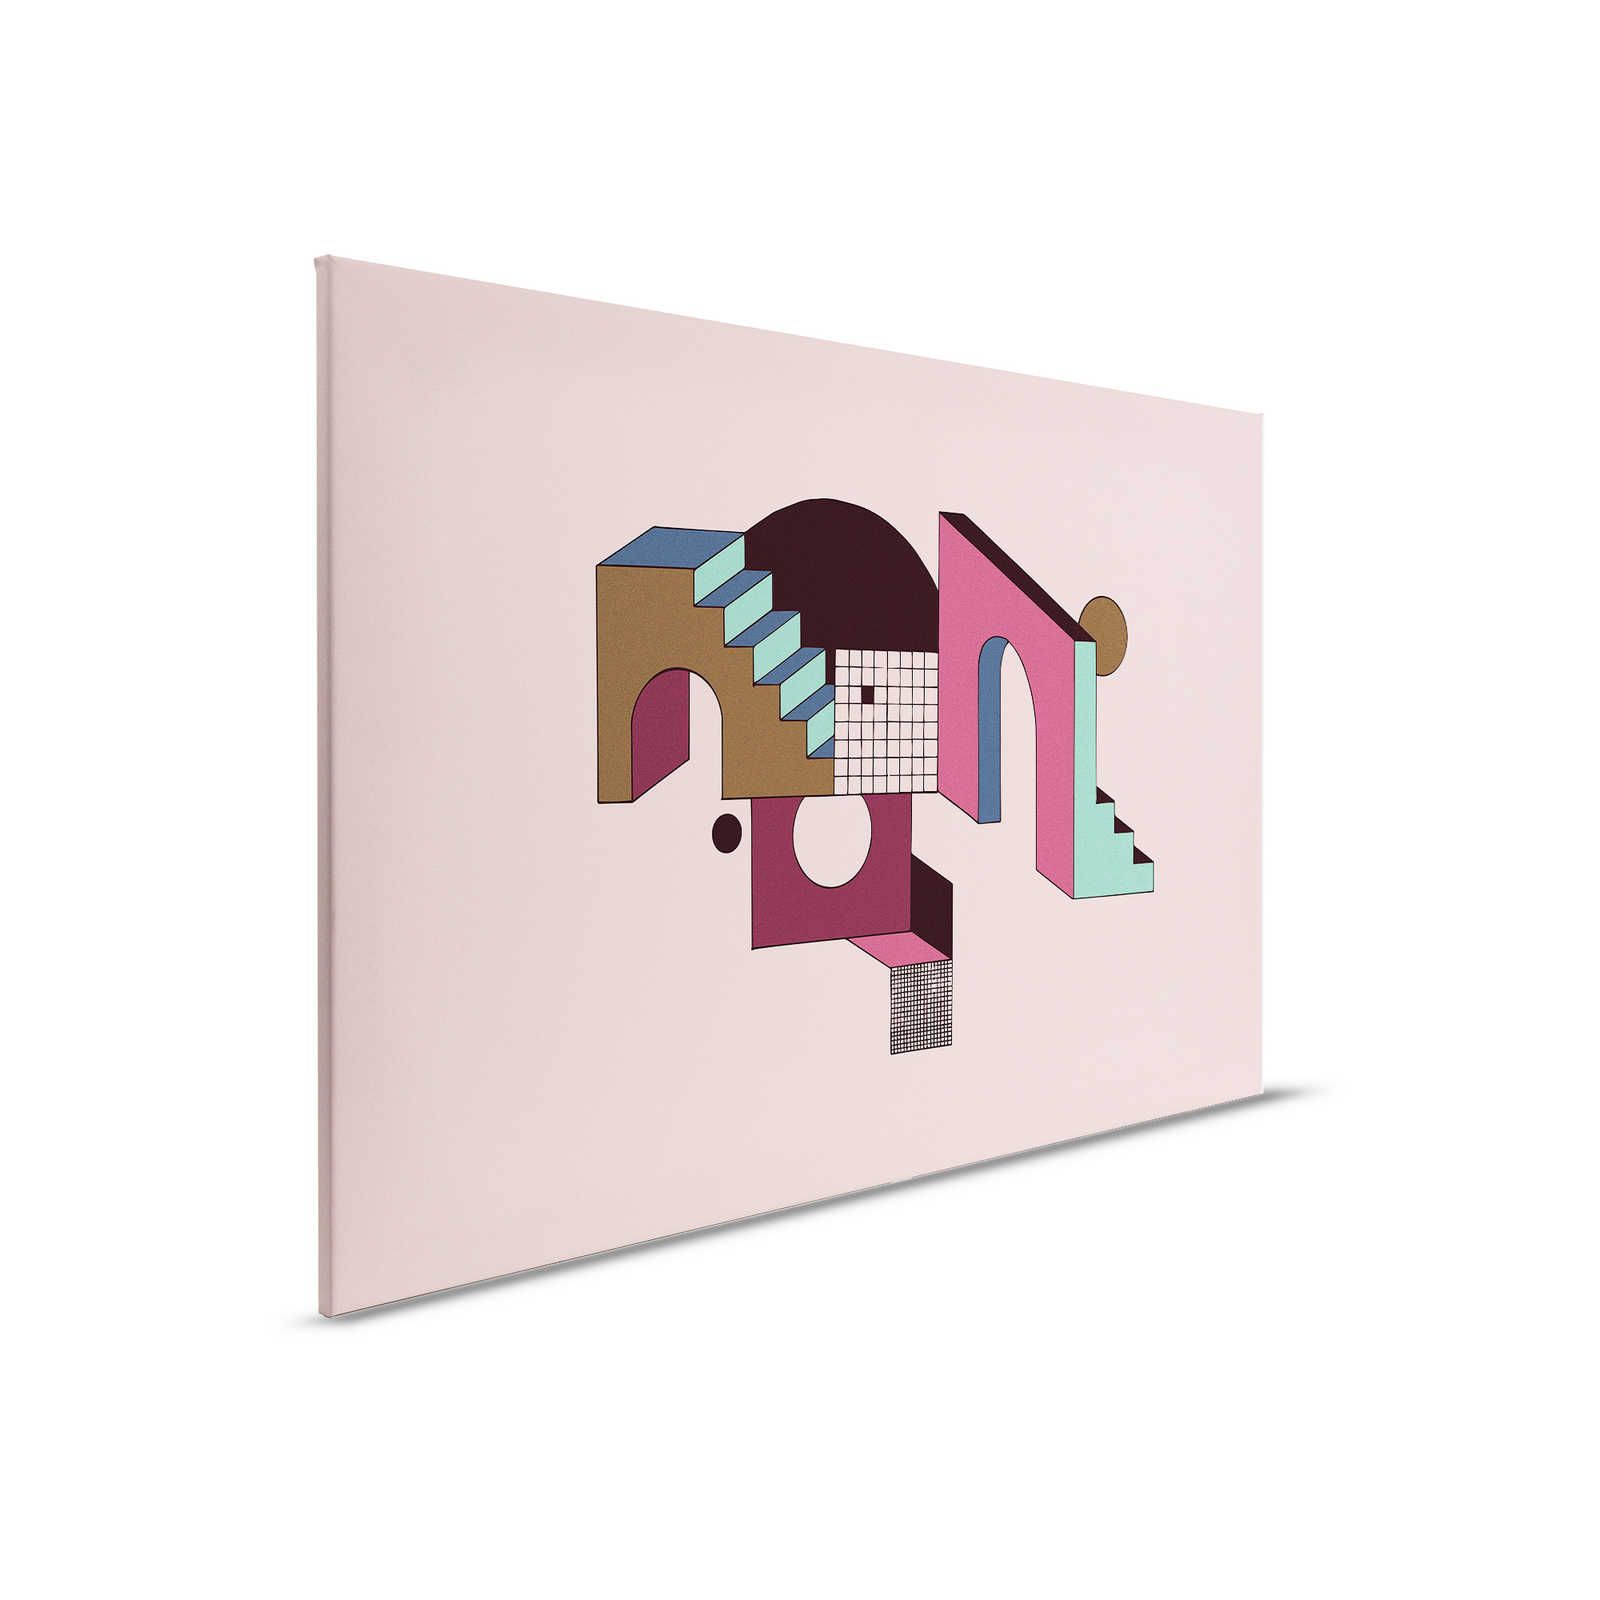 Freetown 2 - Lienzo rosa cuadro abstracto escaleras arquitectura - 0.90 m x 0.60 m
